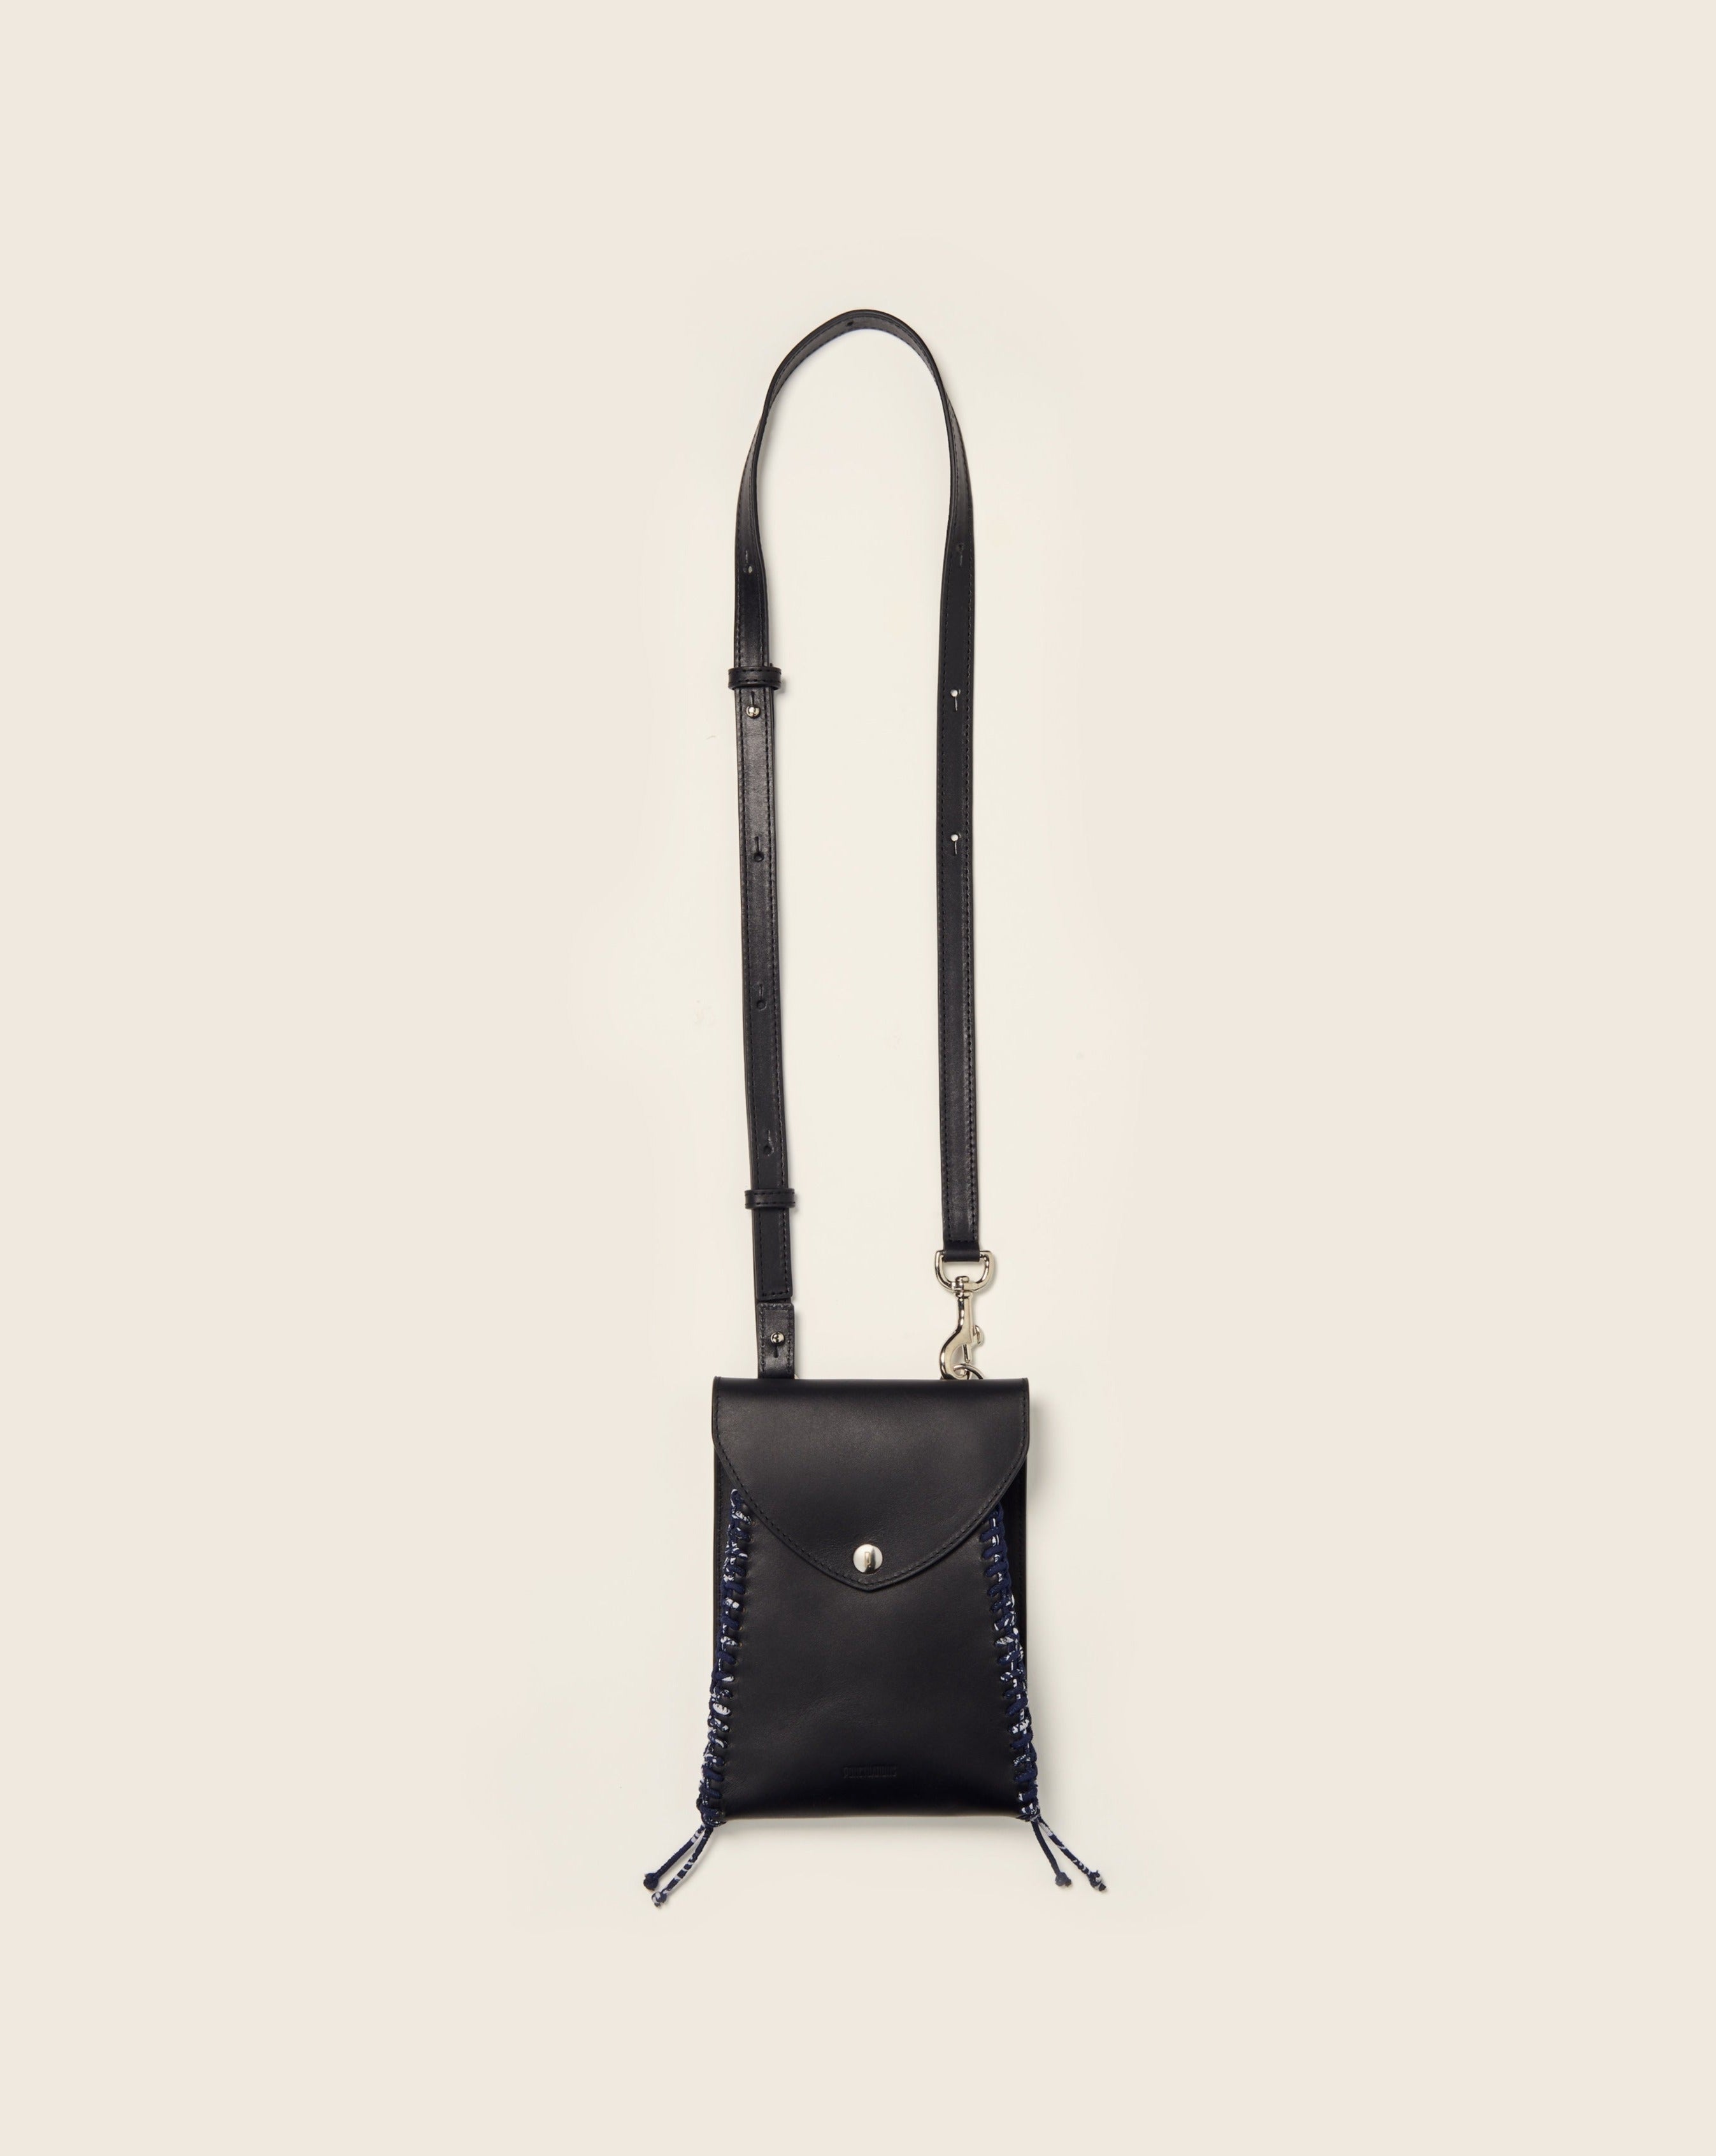 NANGA - Envelope bag - Black leather & Bandana navy